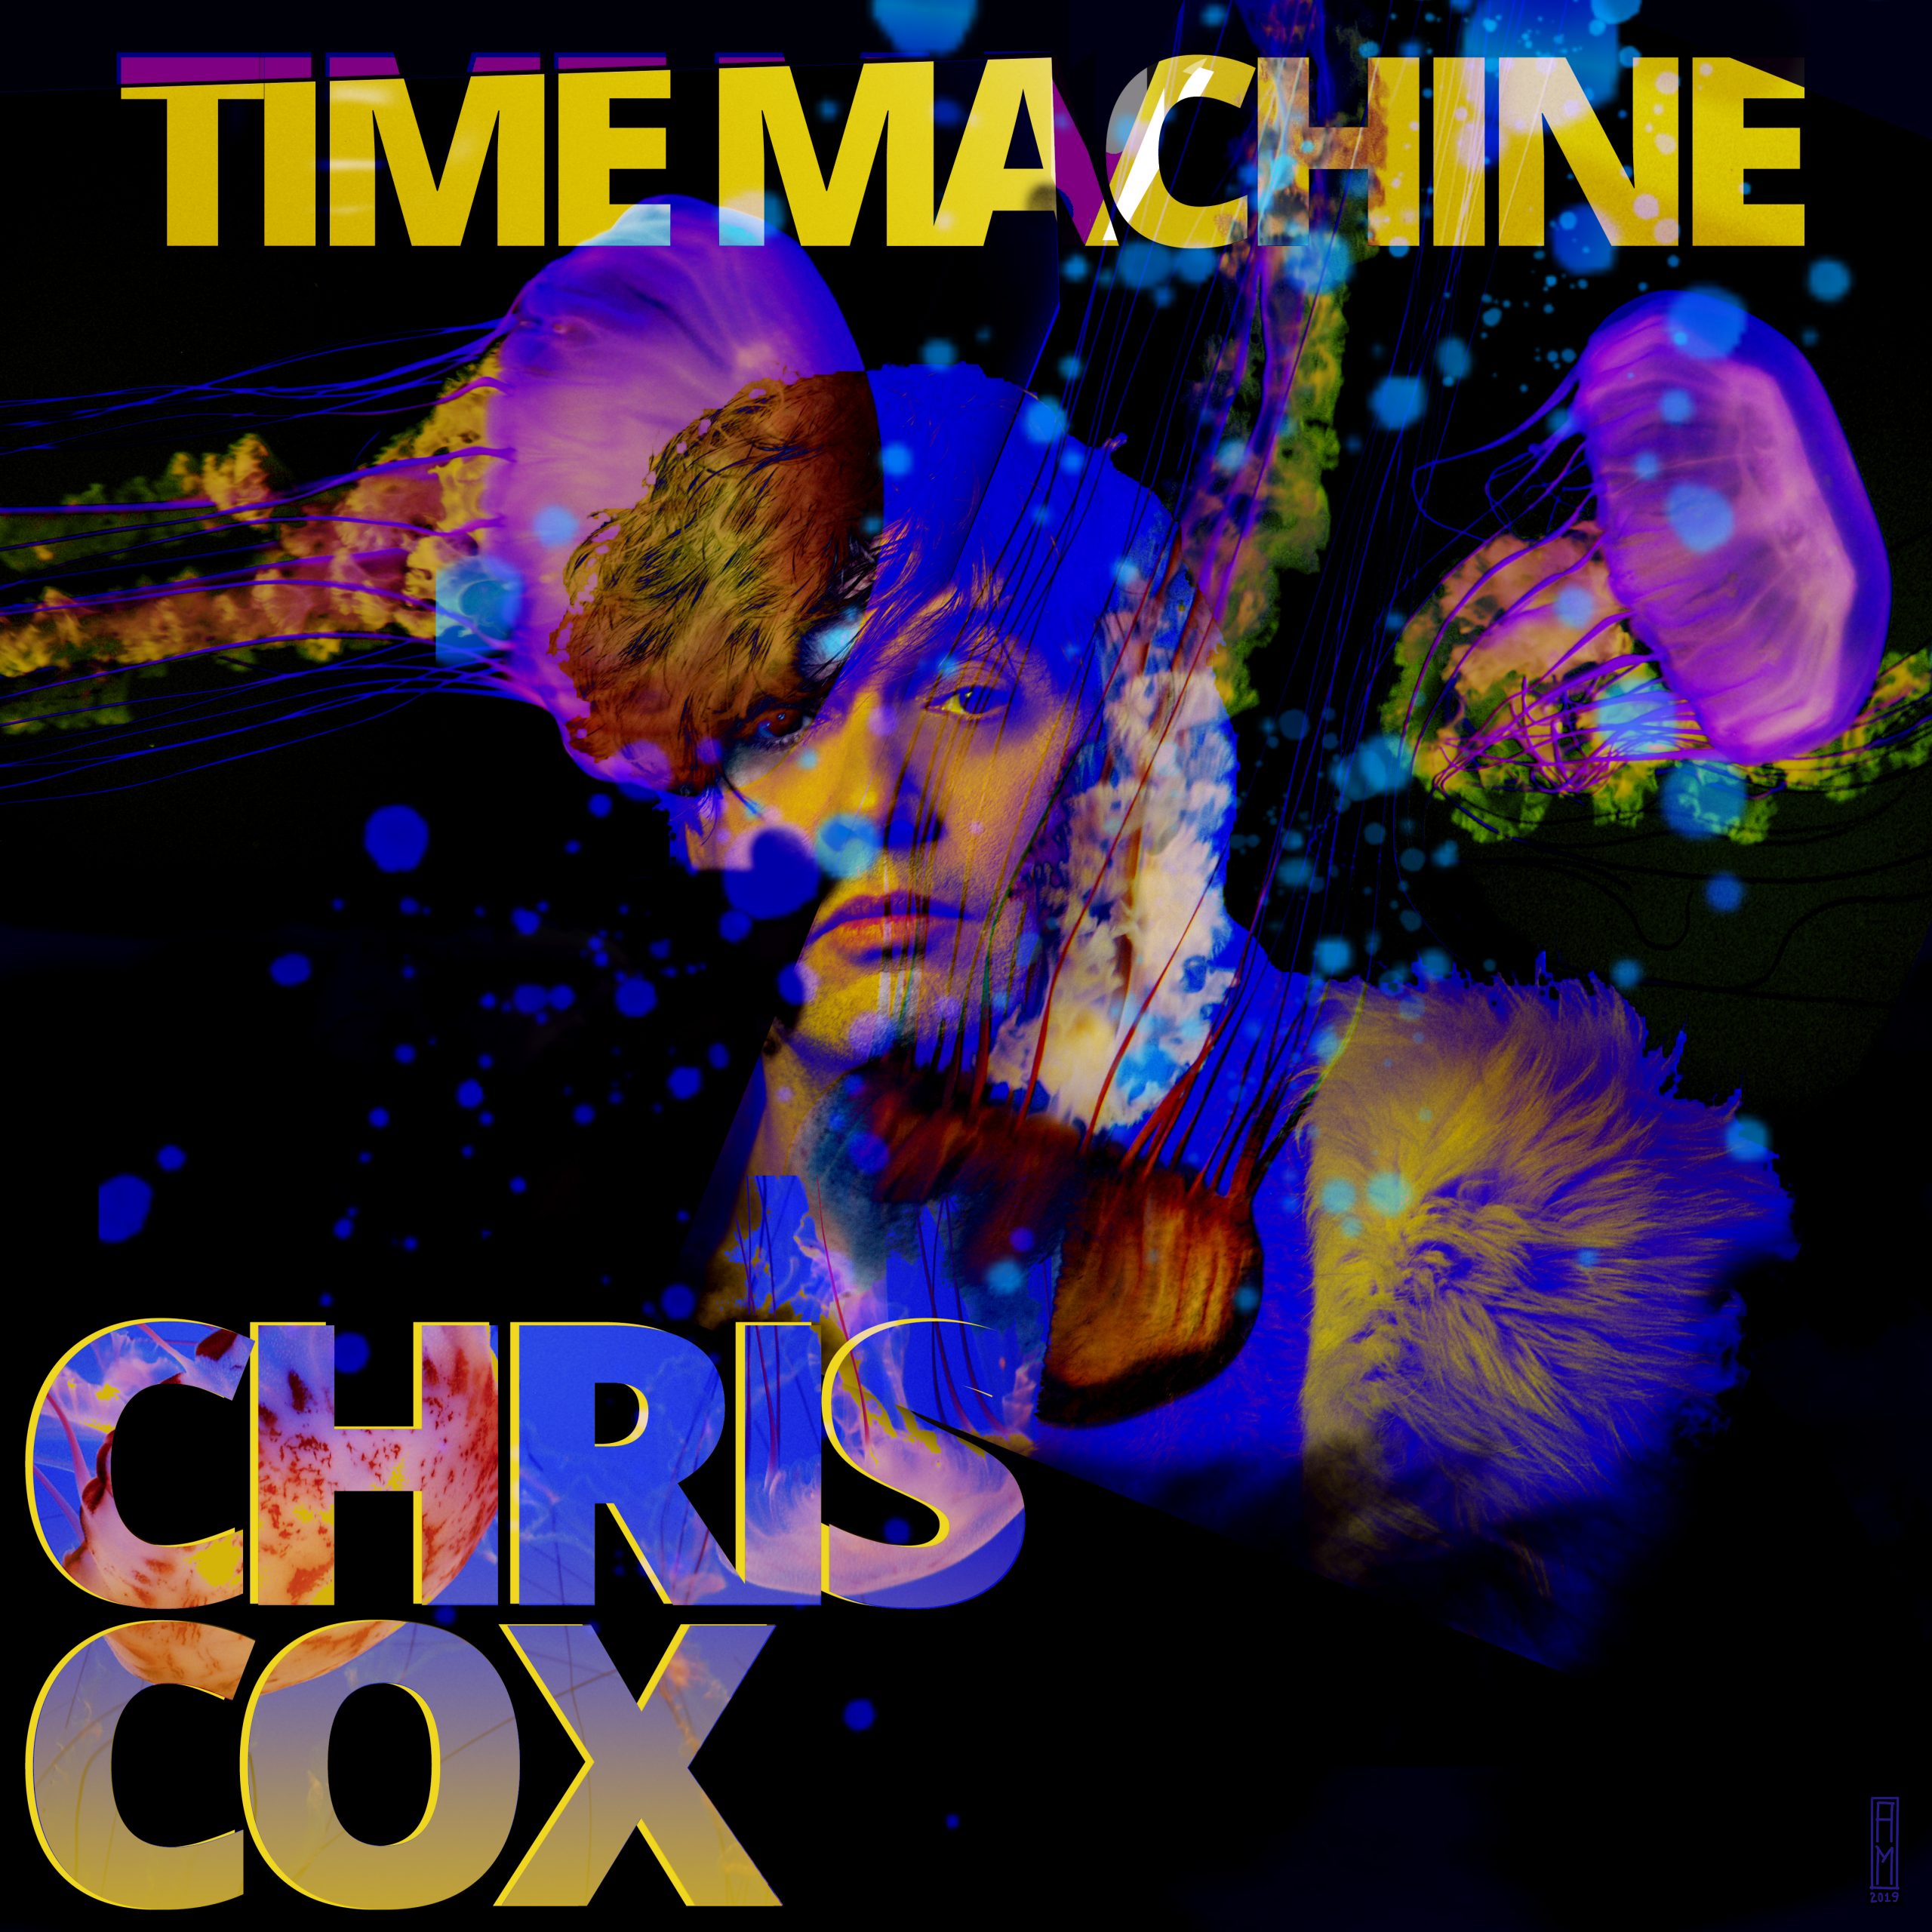 Album cover for Chris Cox "Time Machine"